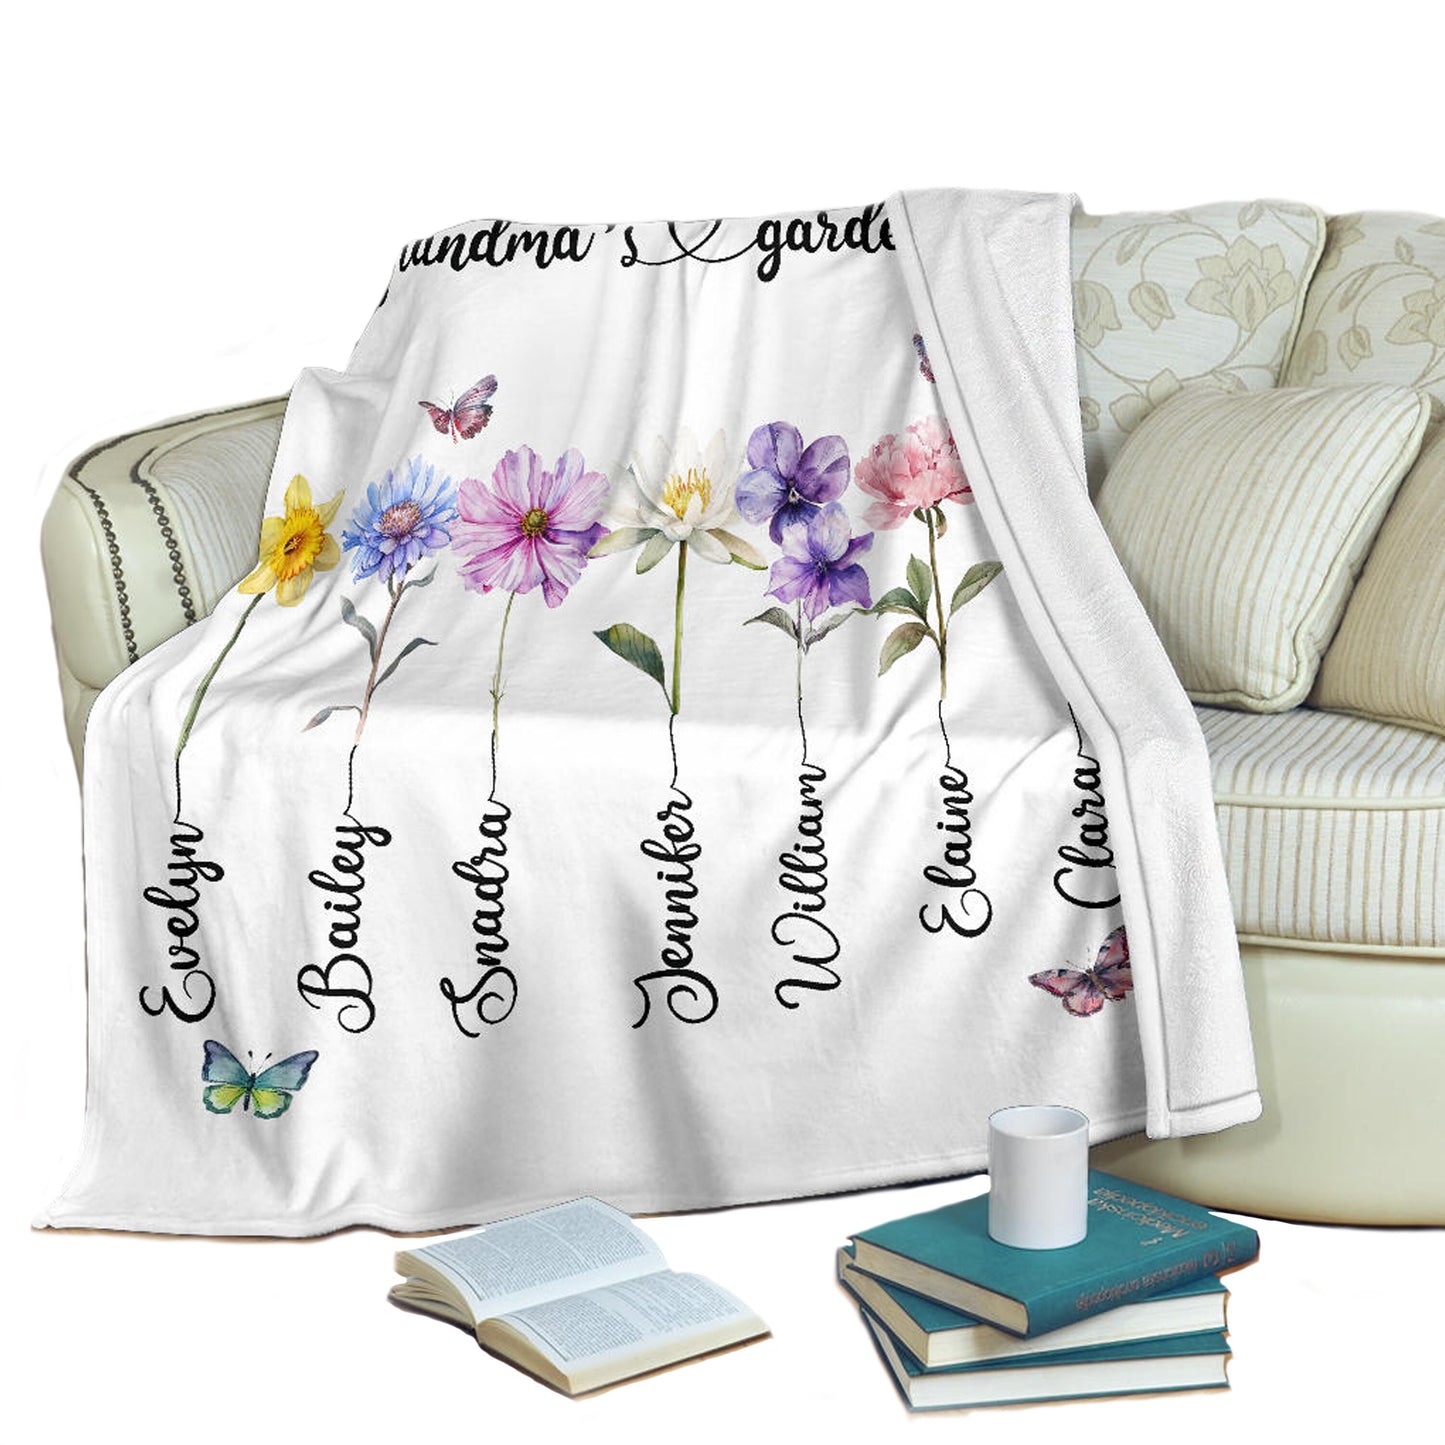 Custom Birth Month Flowers Blanket, Custom Names, Mother's Day, Grandpa Blanket, Great Grandma